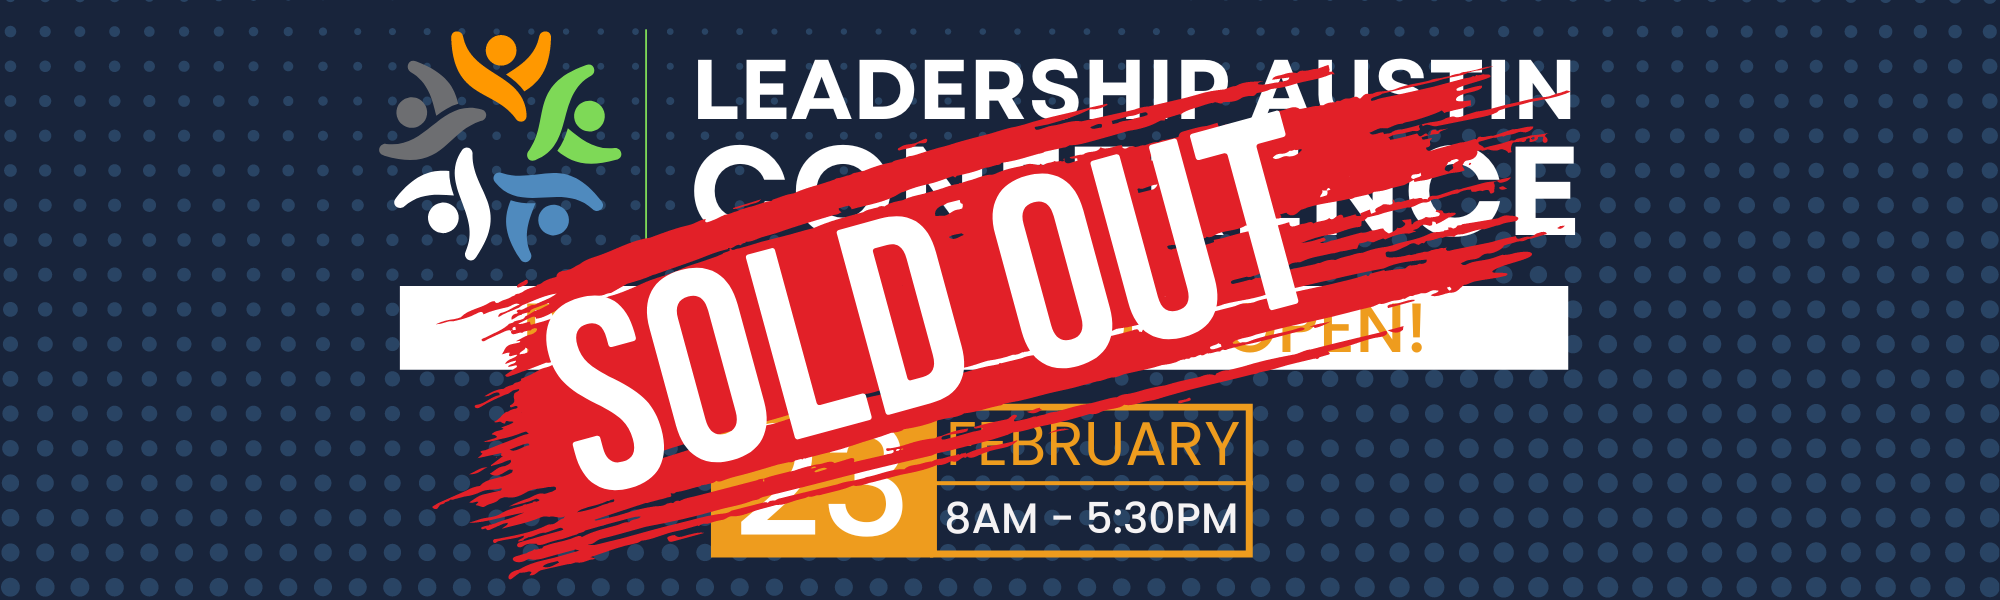 Leadership Austin Conference